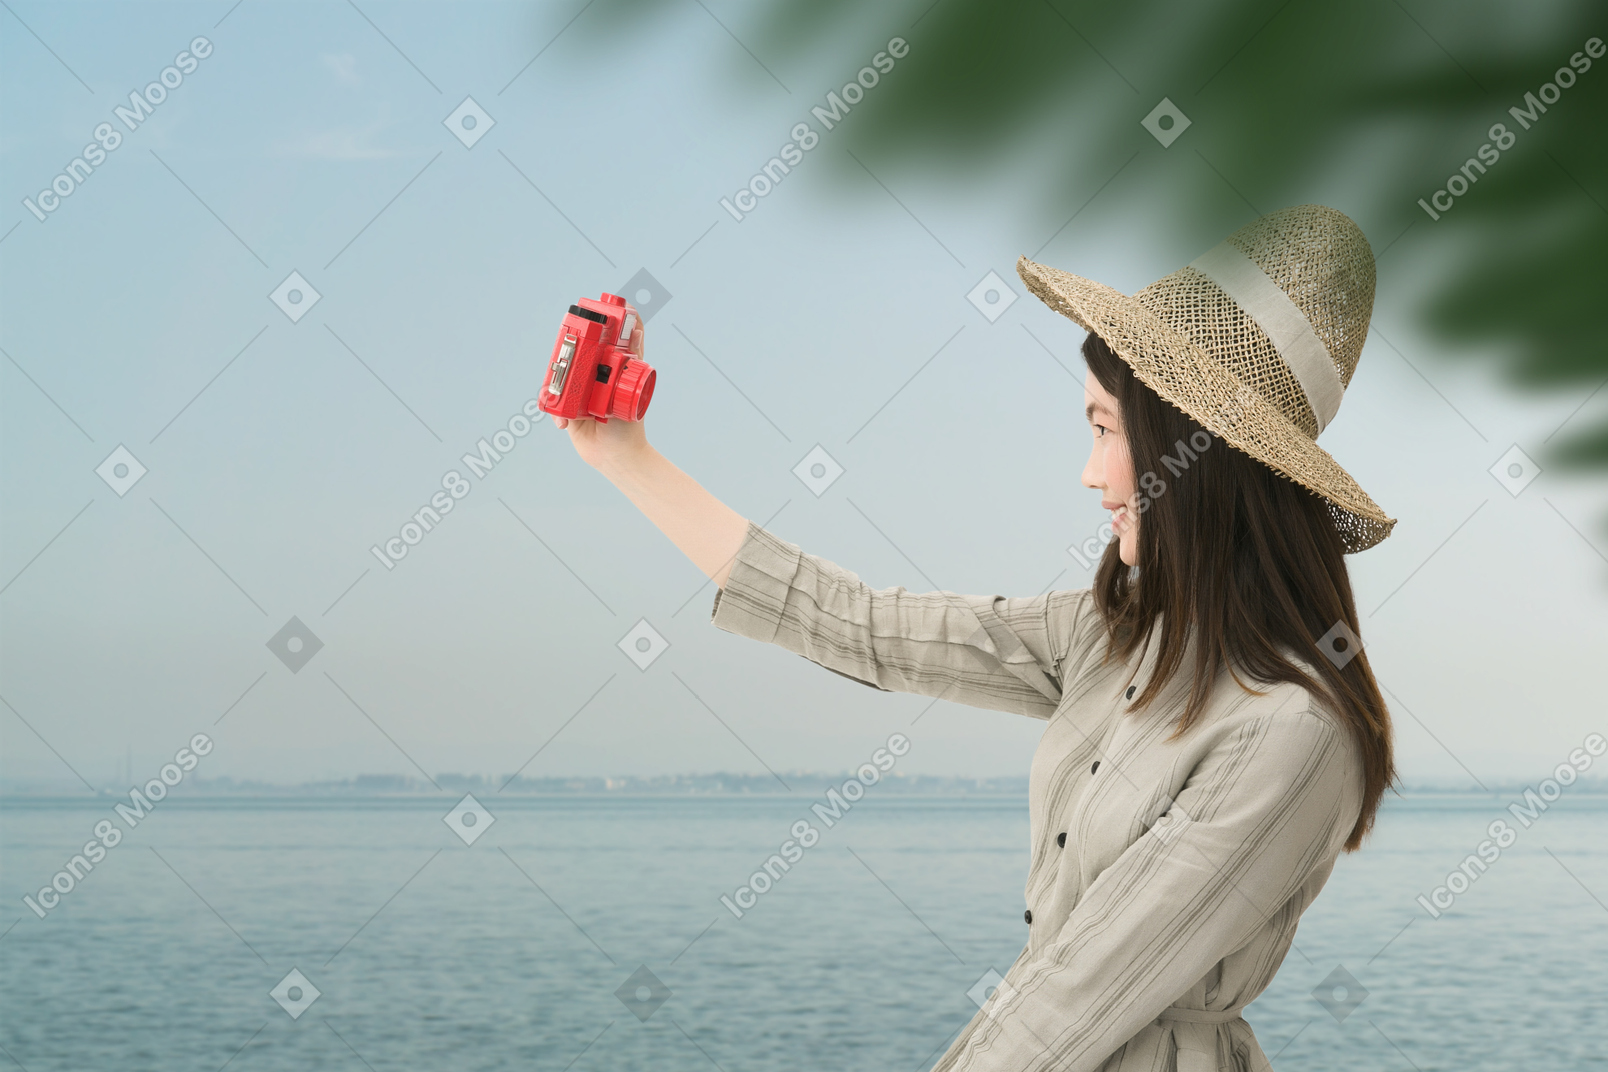 Making selfie at the sea shore